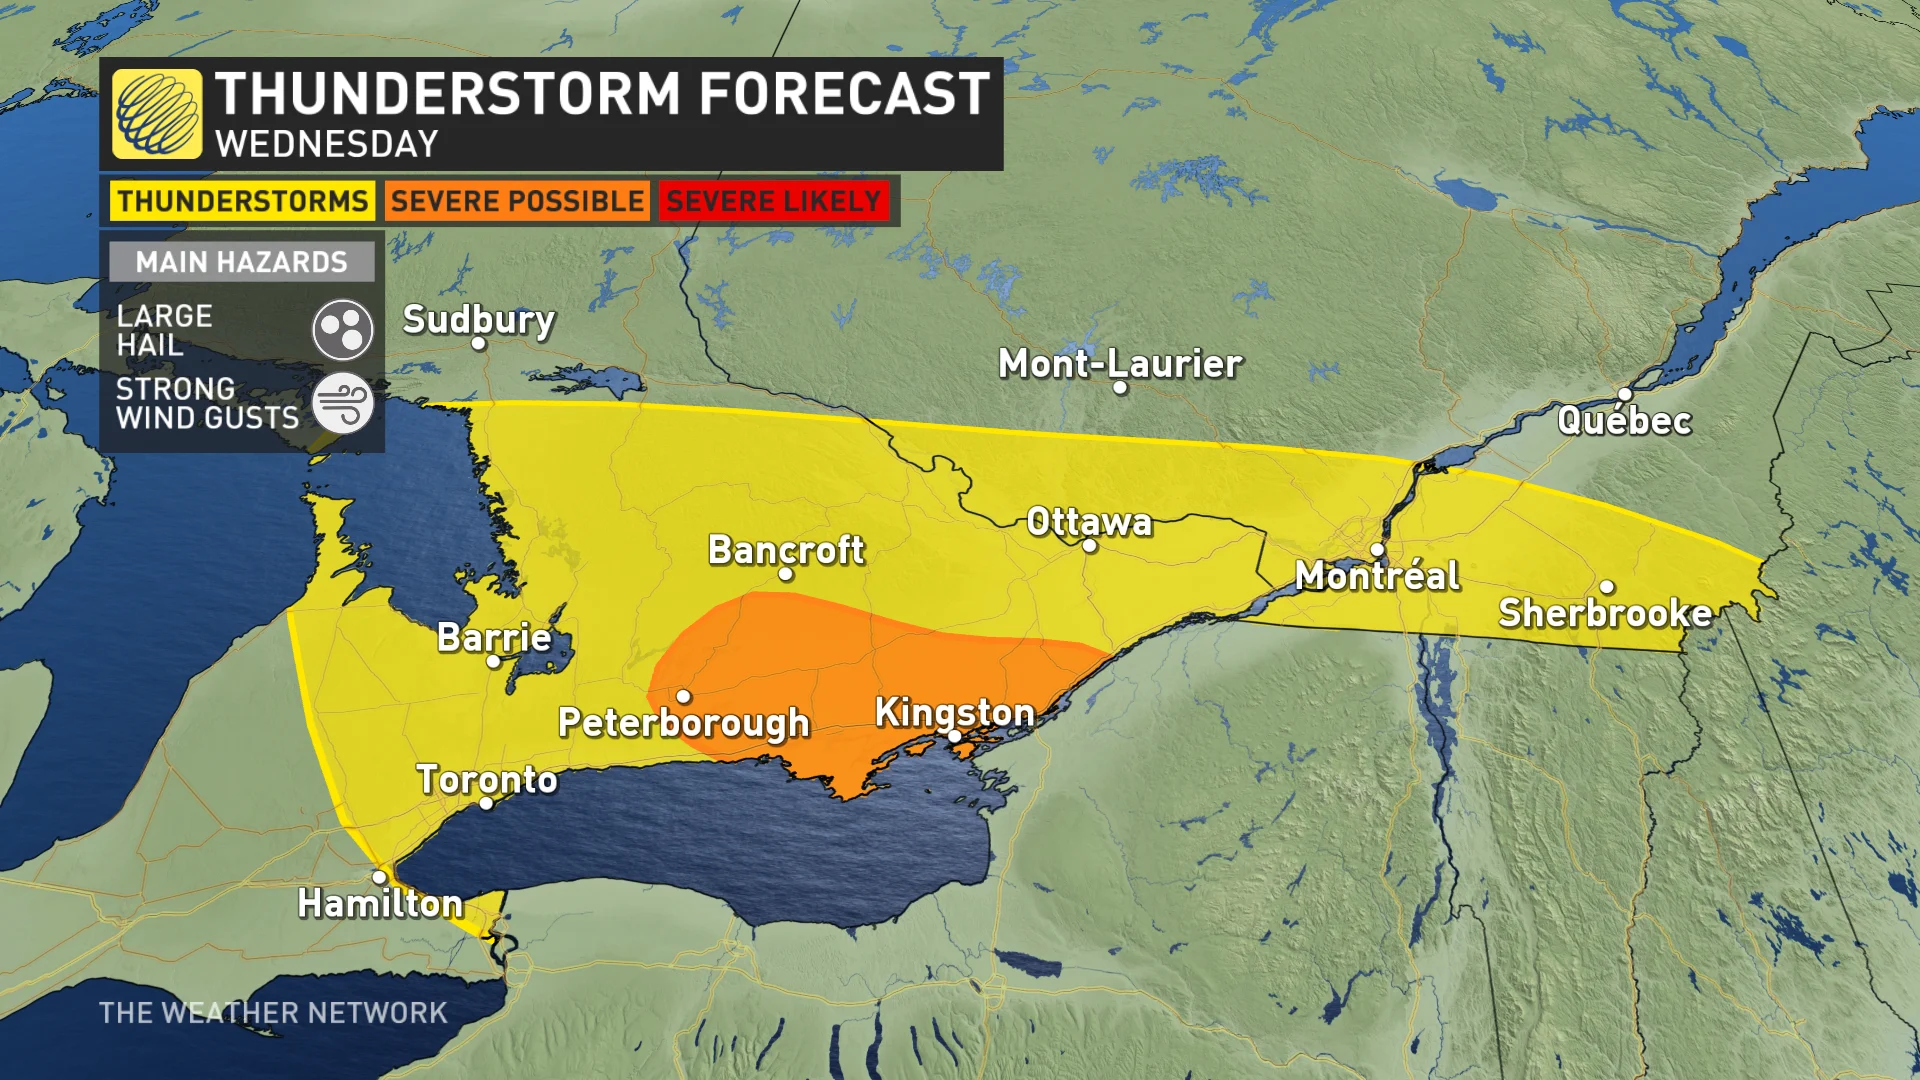 Baron - Wednesday thunderstorm threat Ontario.jpg